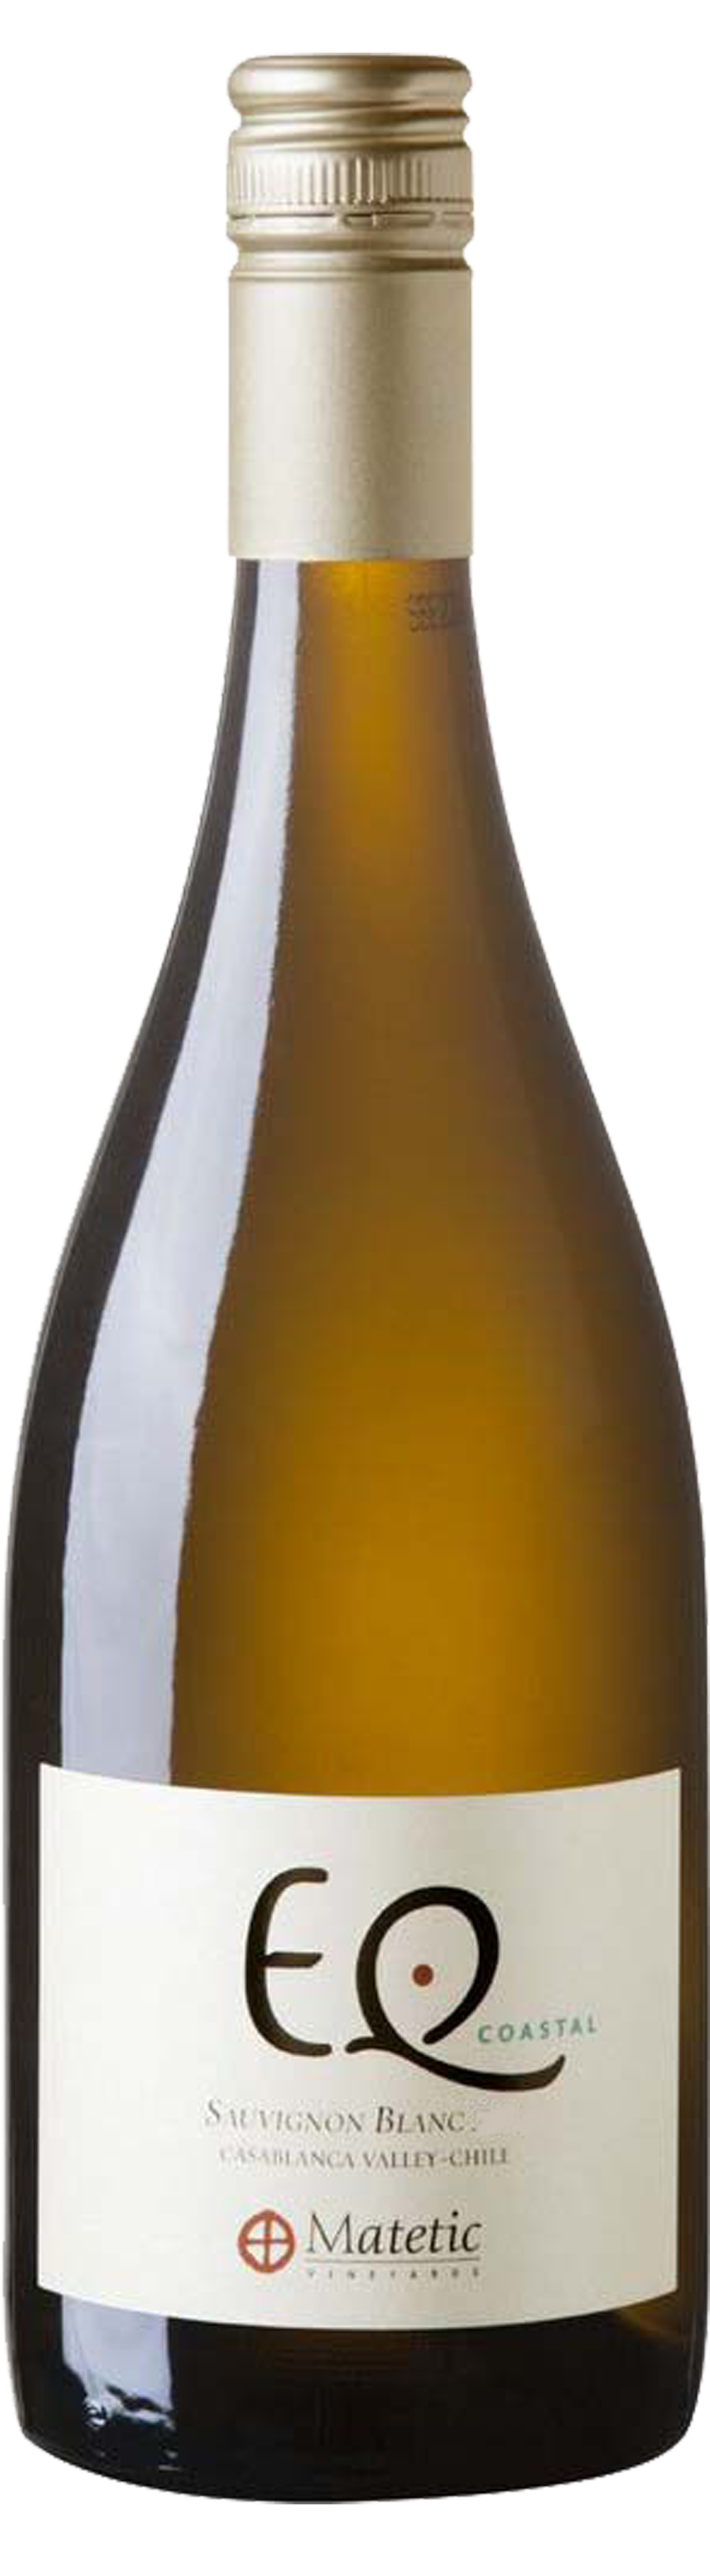 Bottle shot of 2015 EQ Coastal Sauvignon Blanc Organic